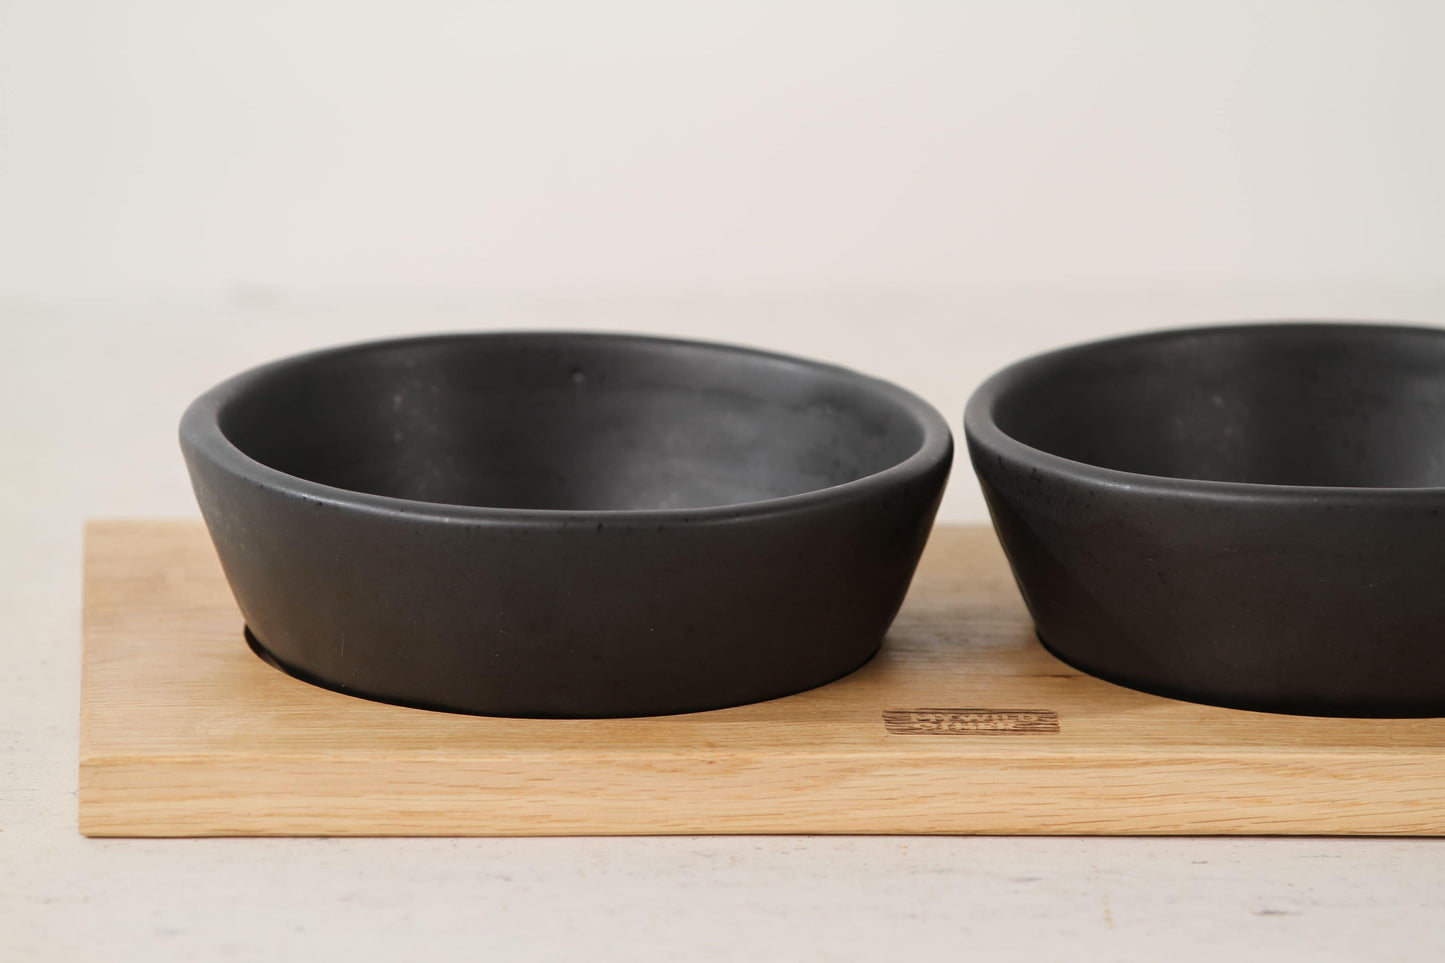 Black HANDMADE CERAMIC dog bowls - European handmade dog accessories by My Wild Other